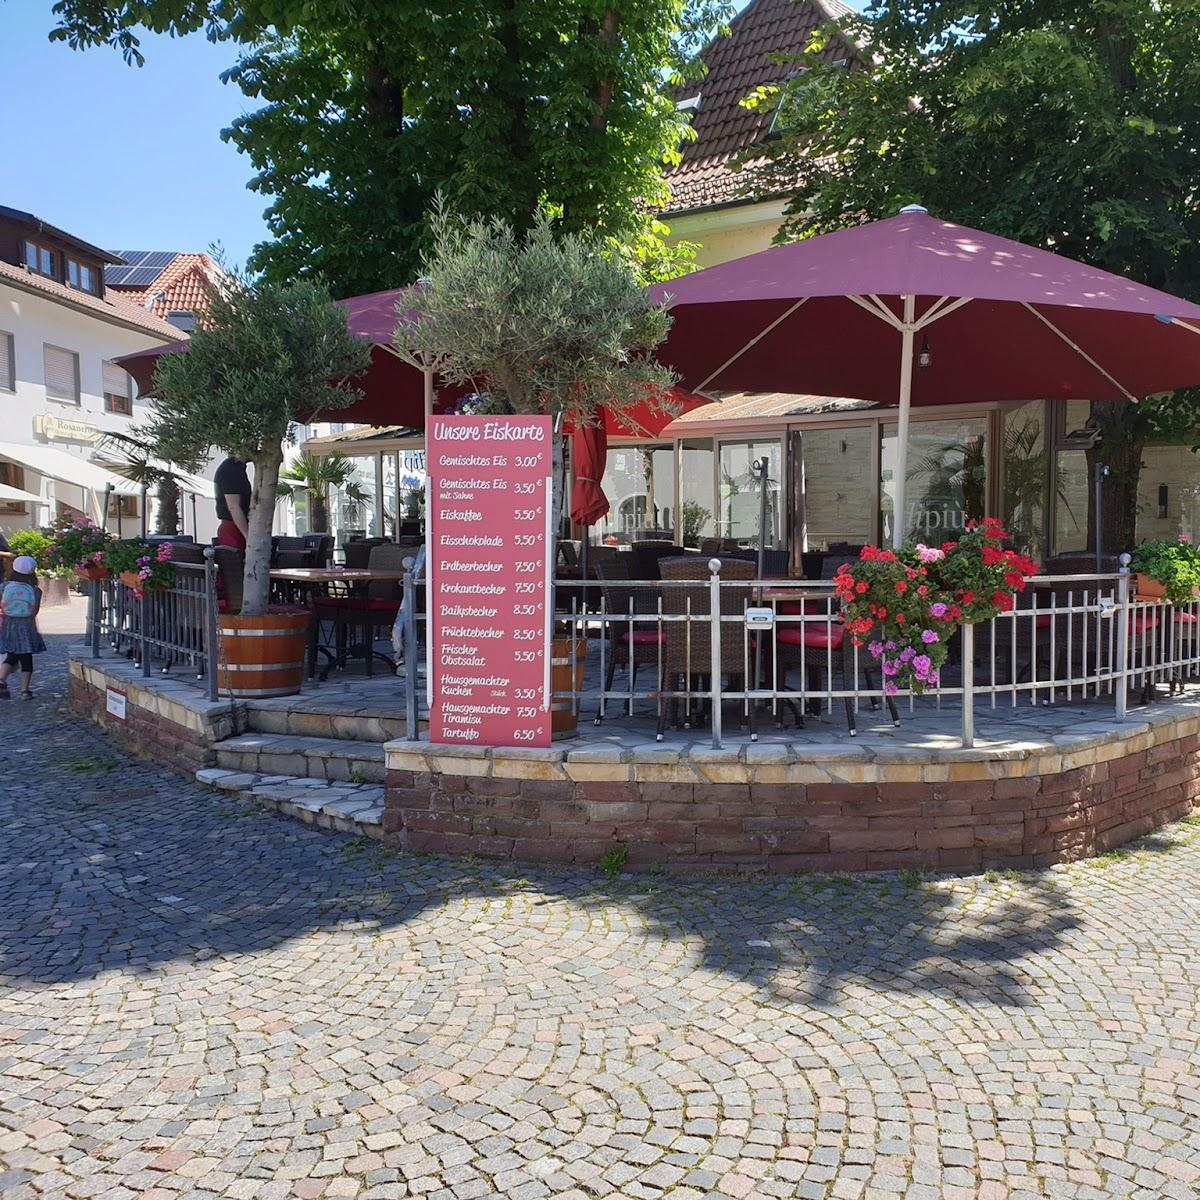 Restaurant "Basler Str. 37" in Bad Krozingen